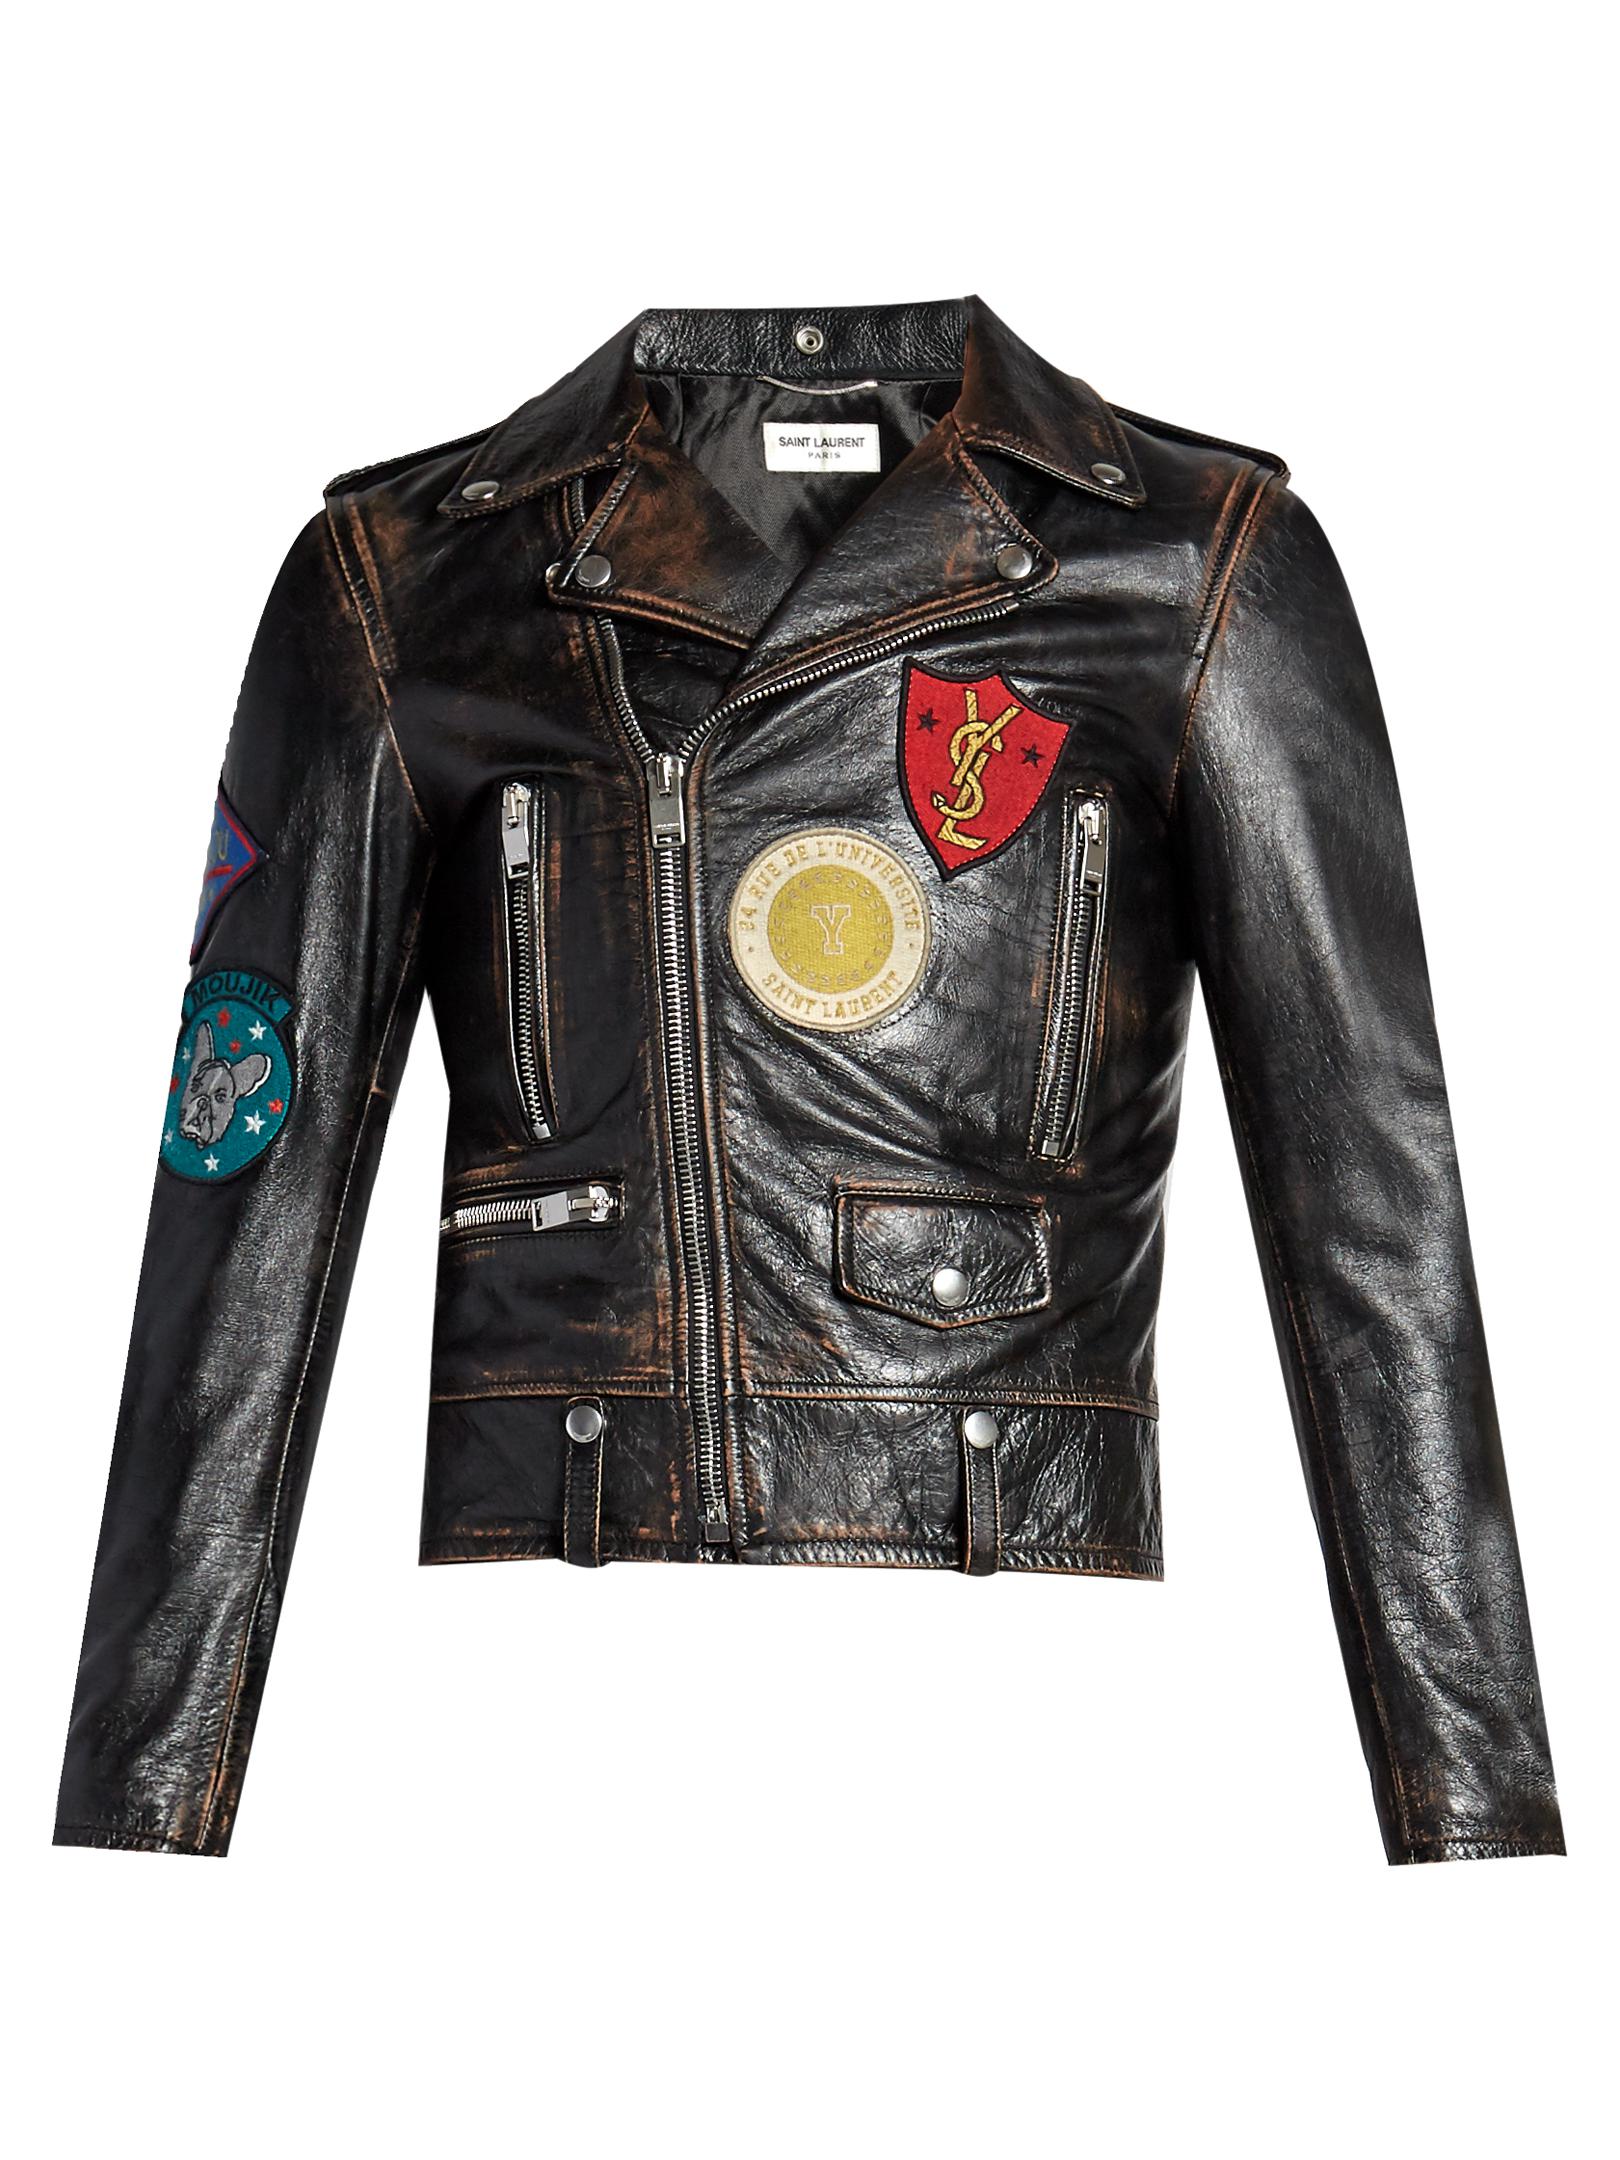 Saint Laurent Badge-appliqué Leather Biker Jacket in Brown for Men - Lyst